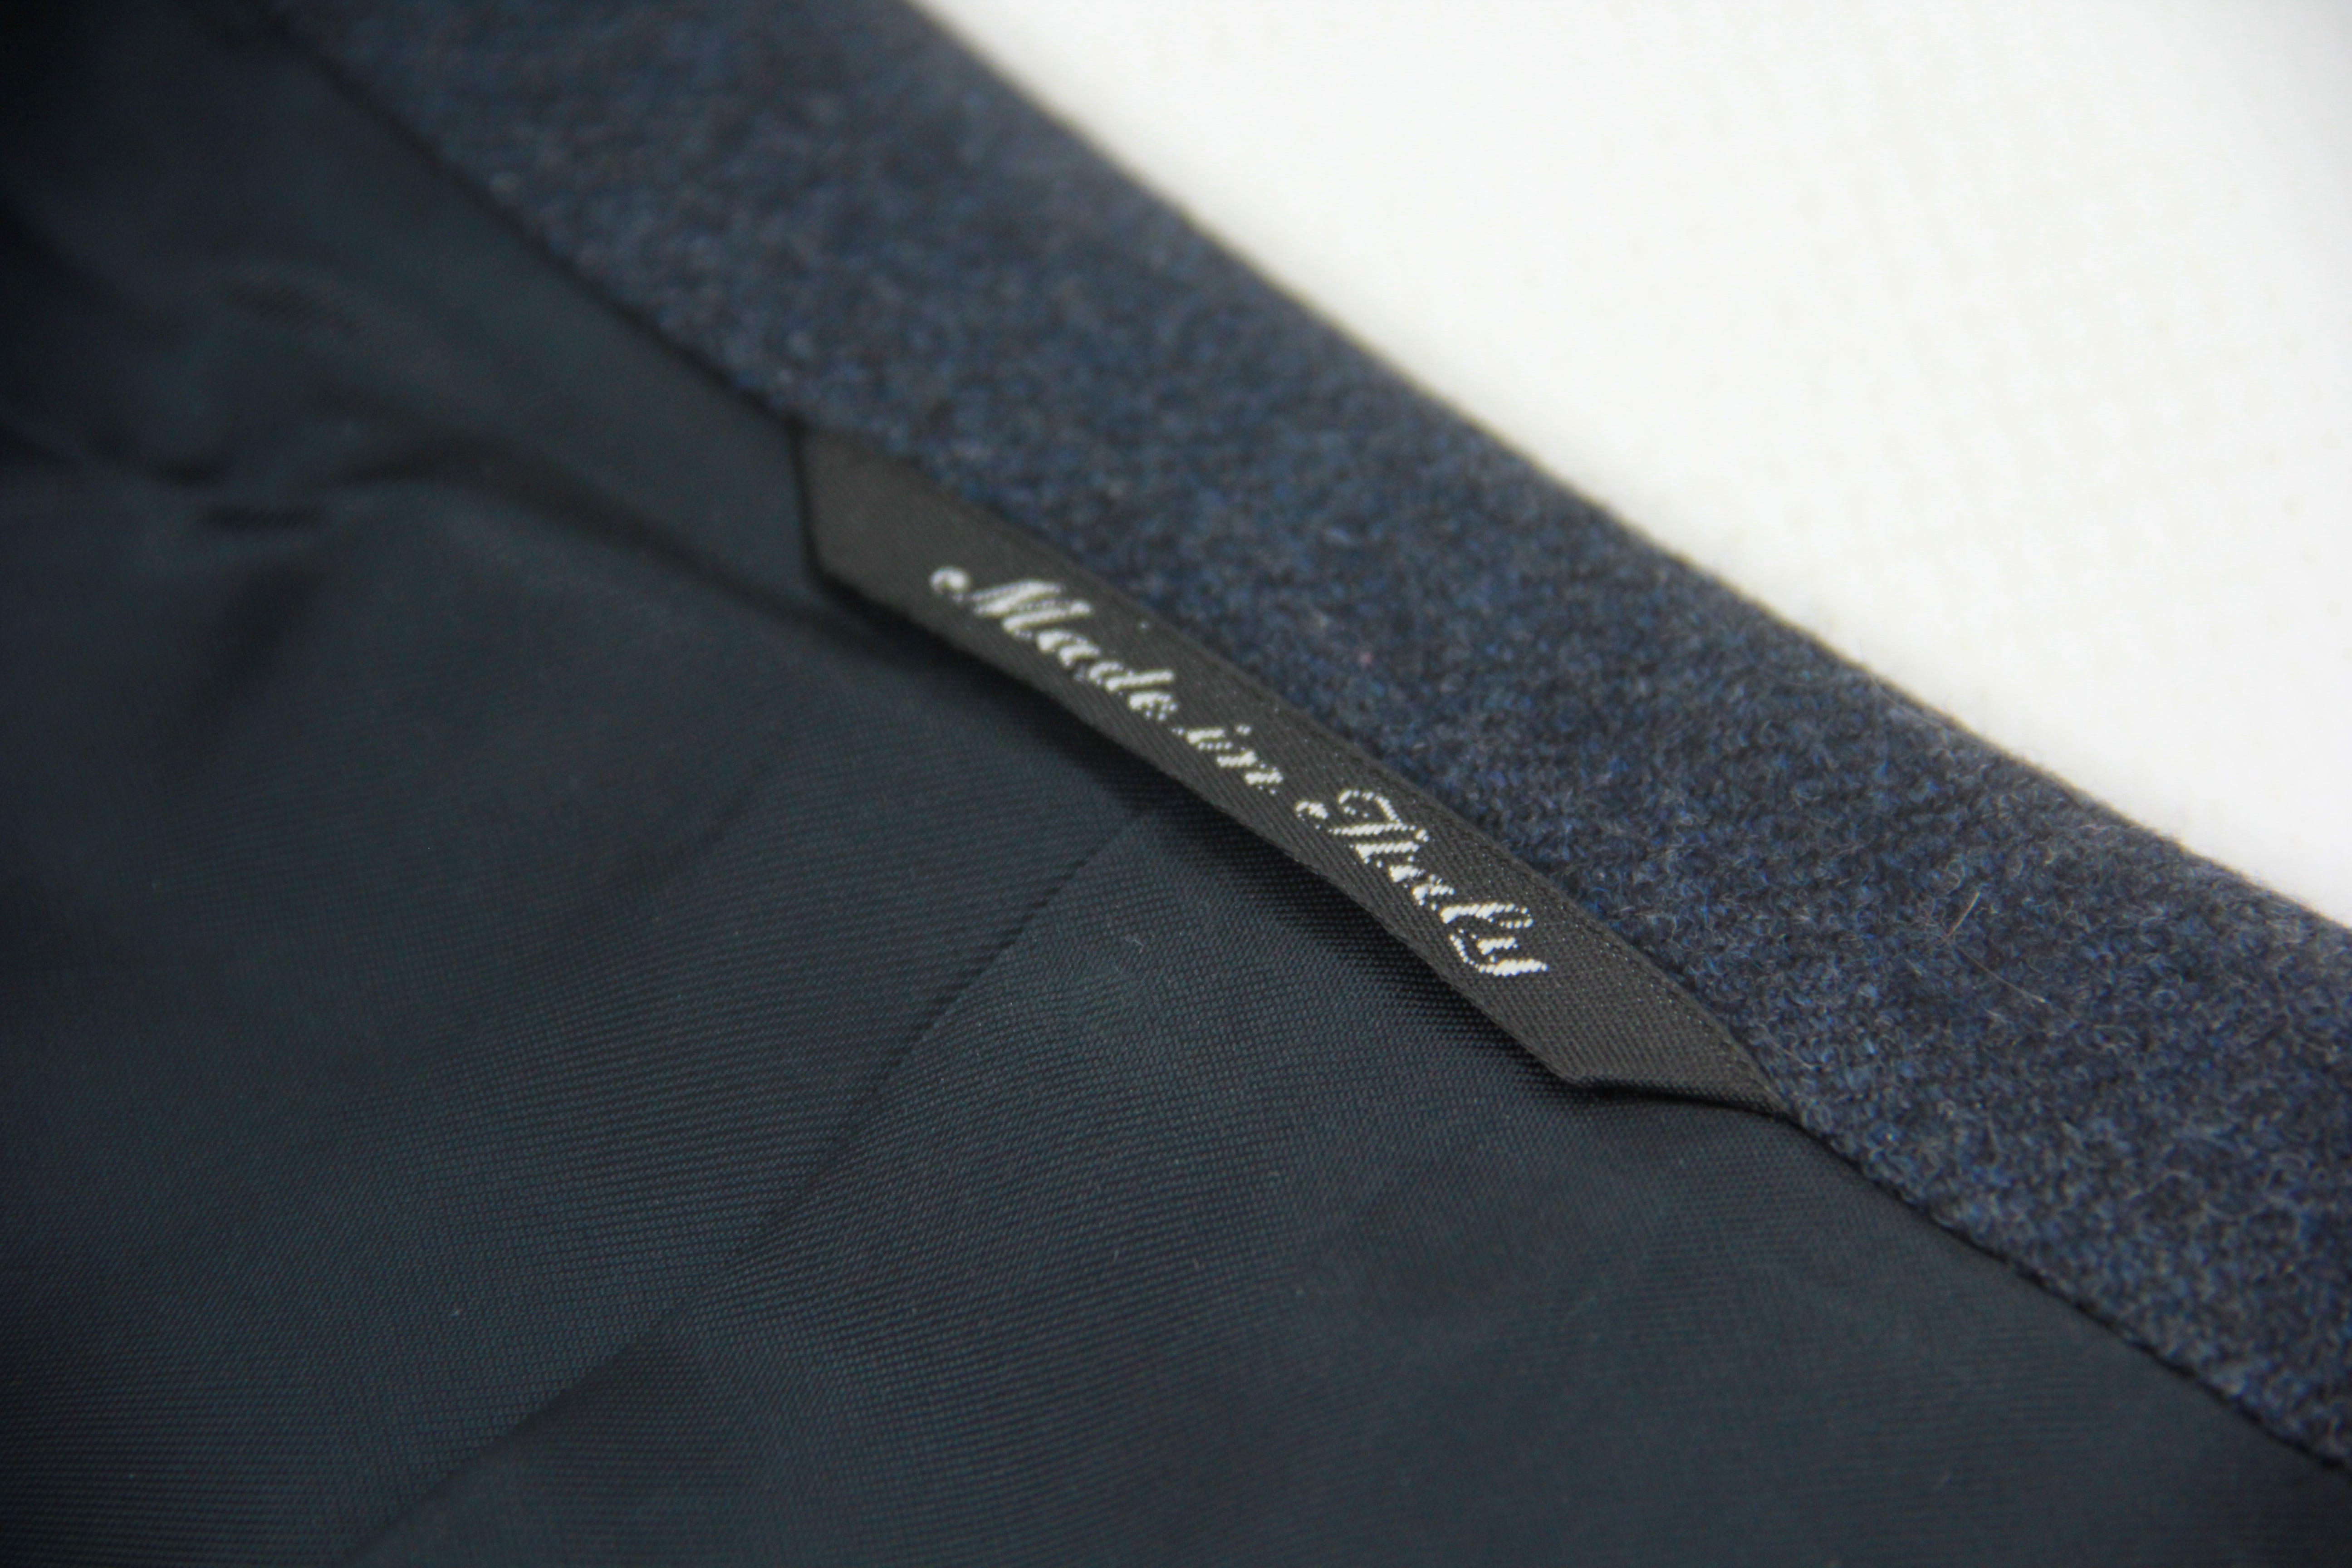 CANALI Cashmere Wool Dark Blue Blazer, SIZE US 40R, EU 50R